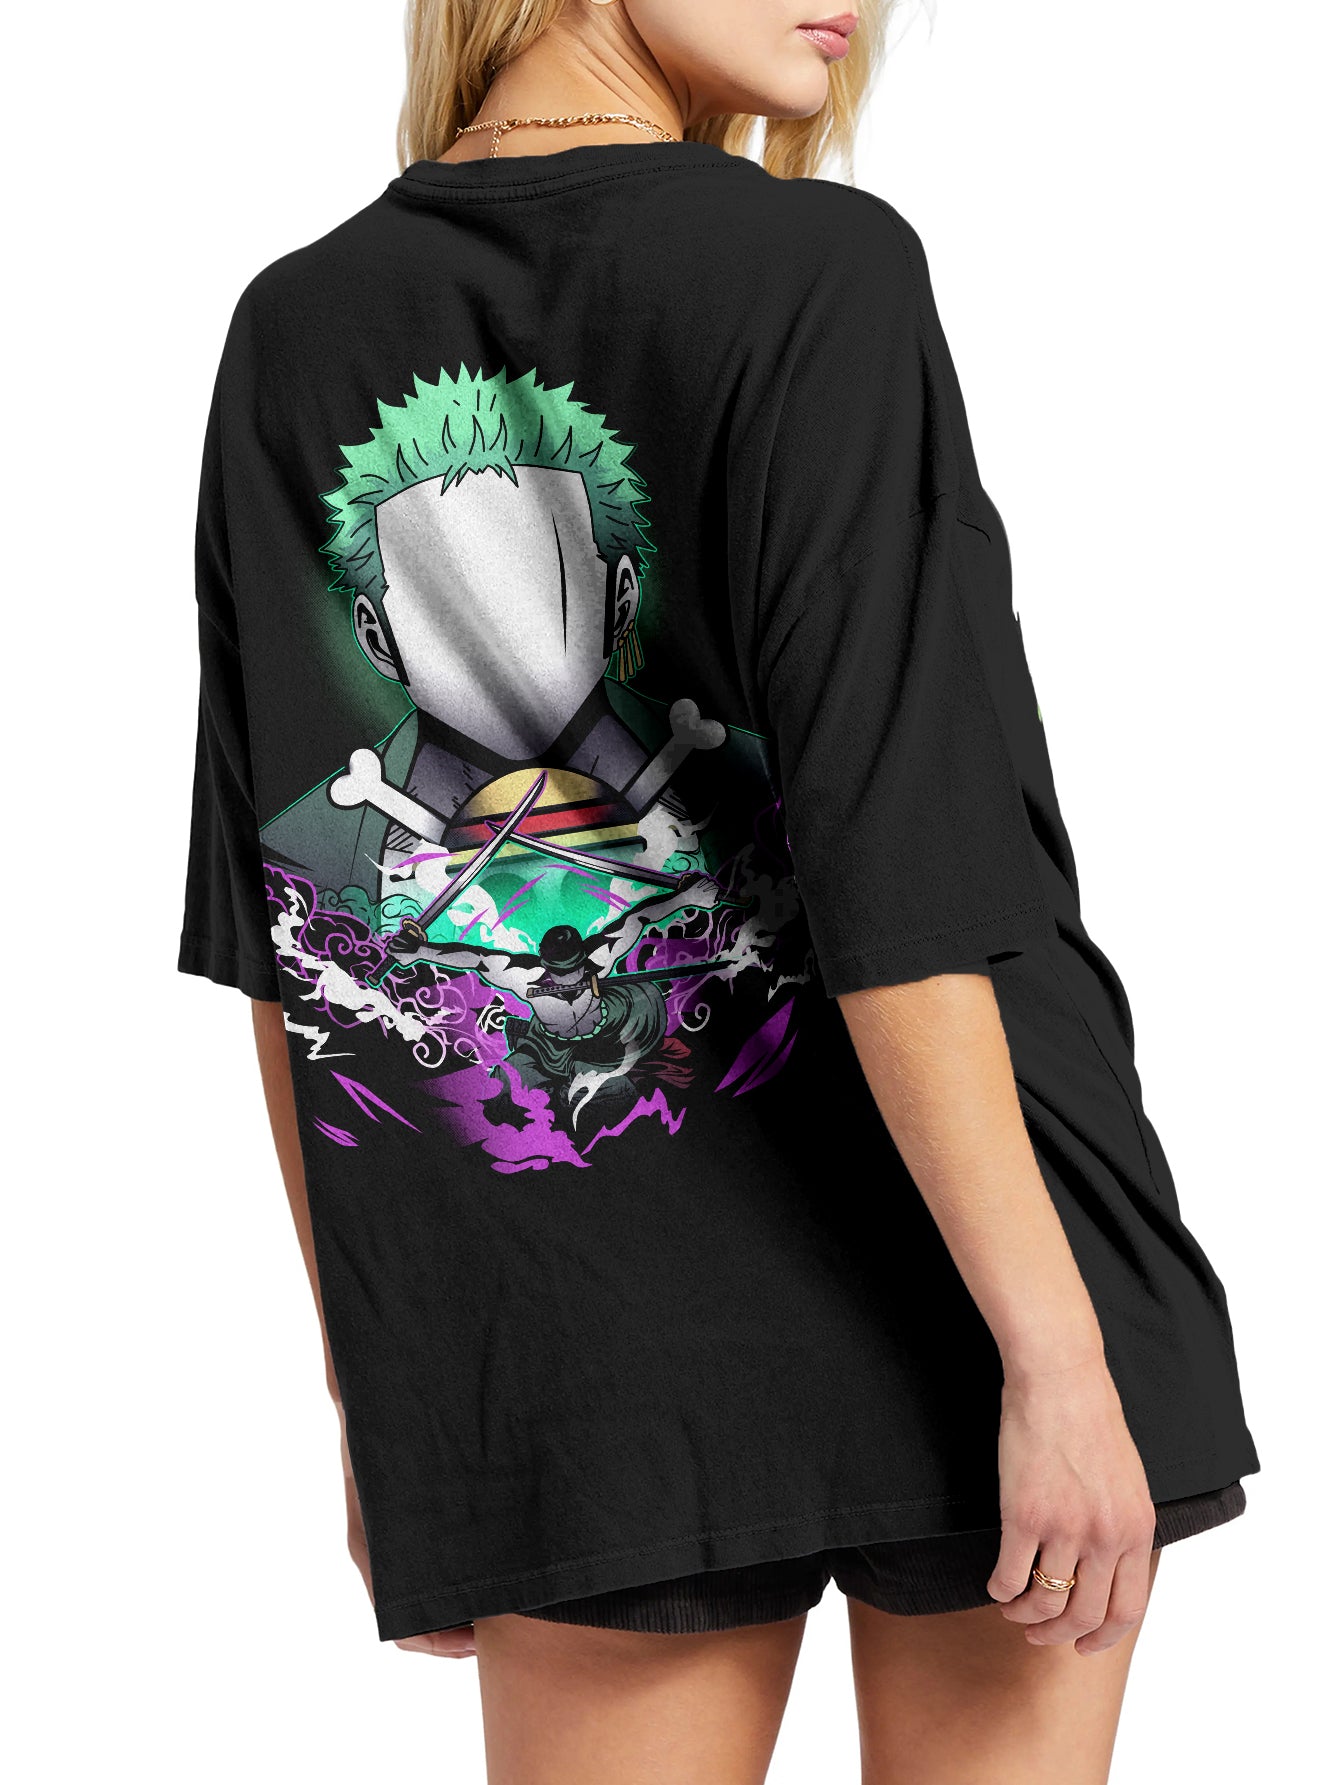 Zoro Spirit Urban Fashion Oversize T-Shirt